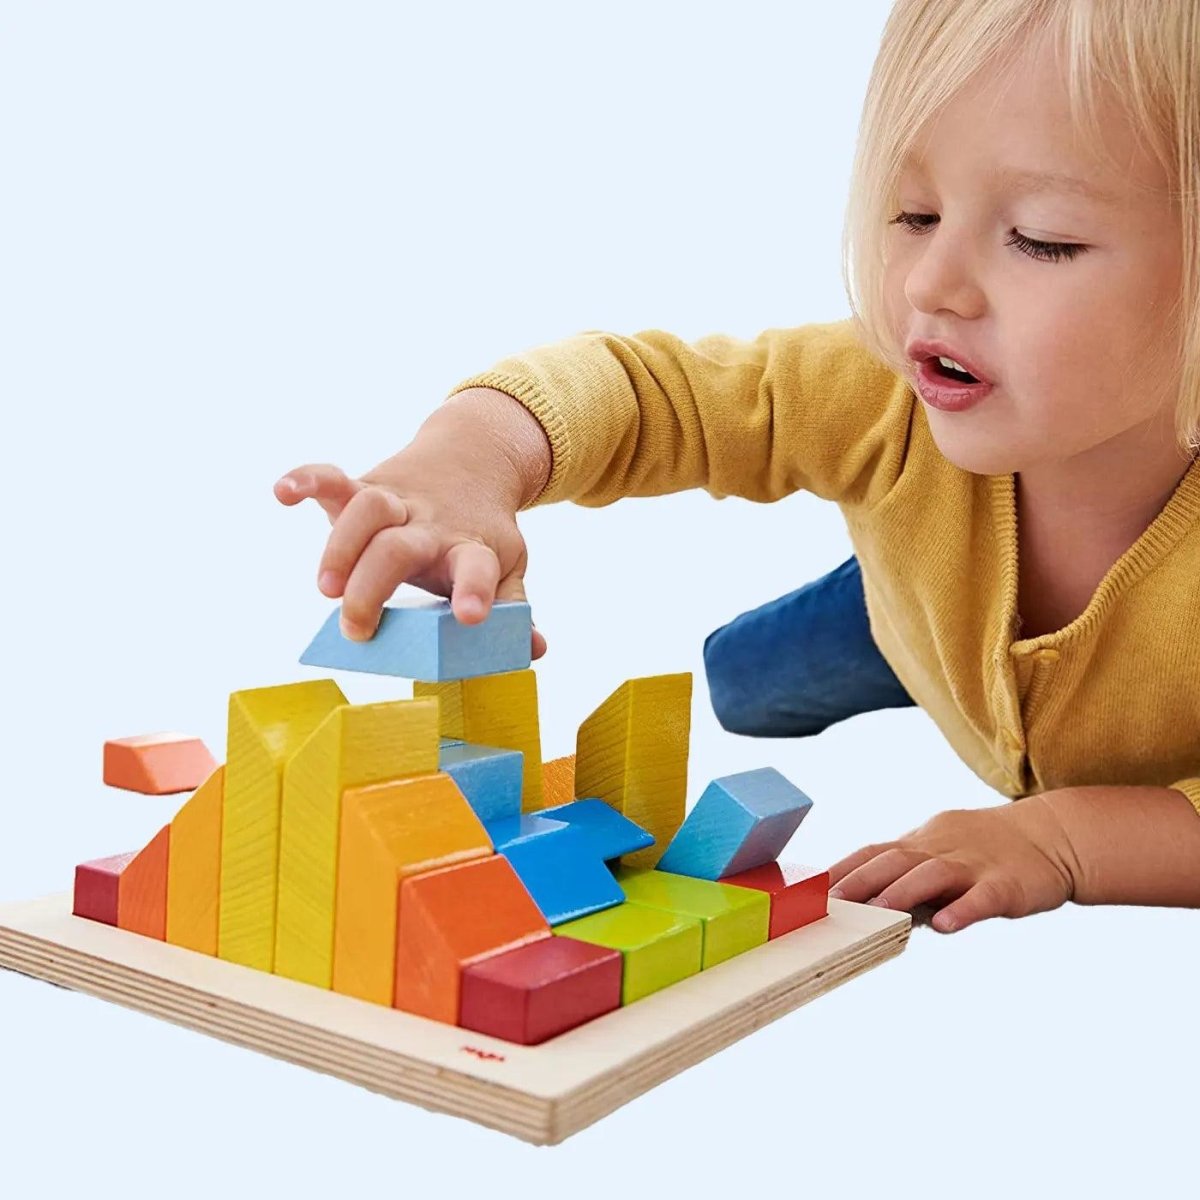 3D Wooden Blocks Arranging & Sorting Game - Zidar Kid